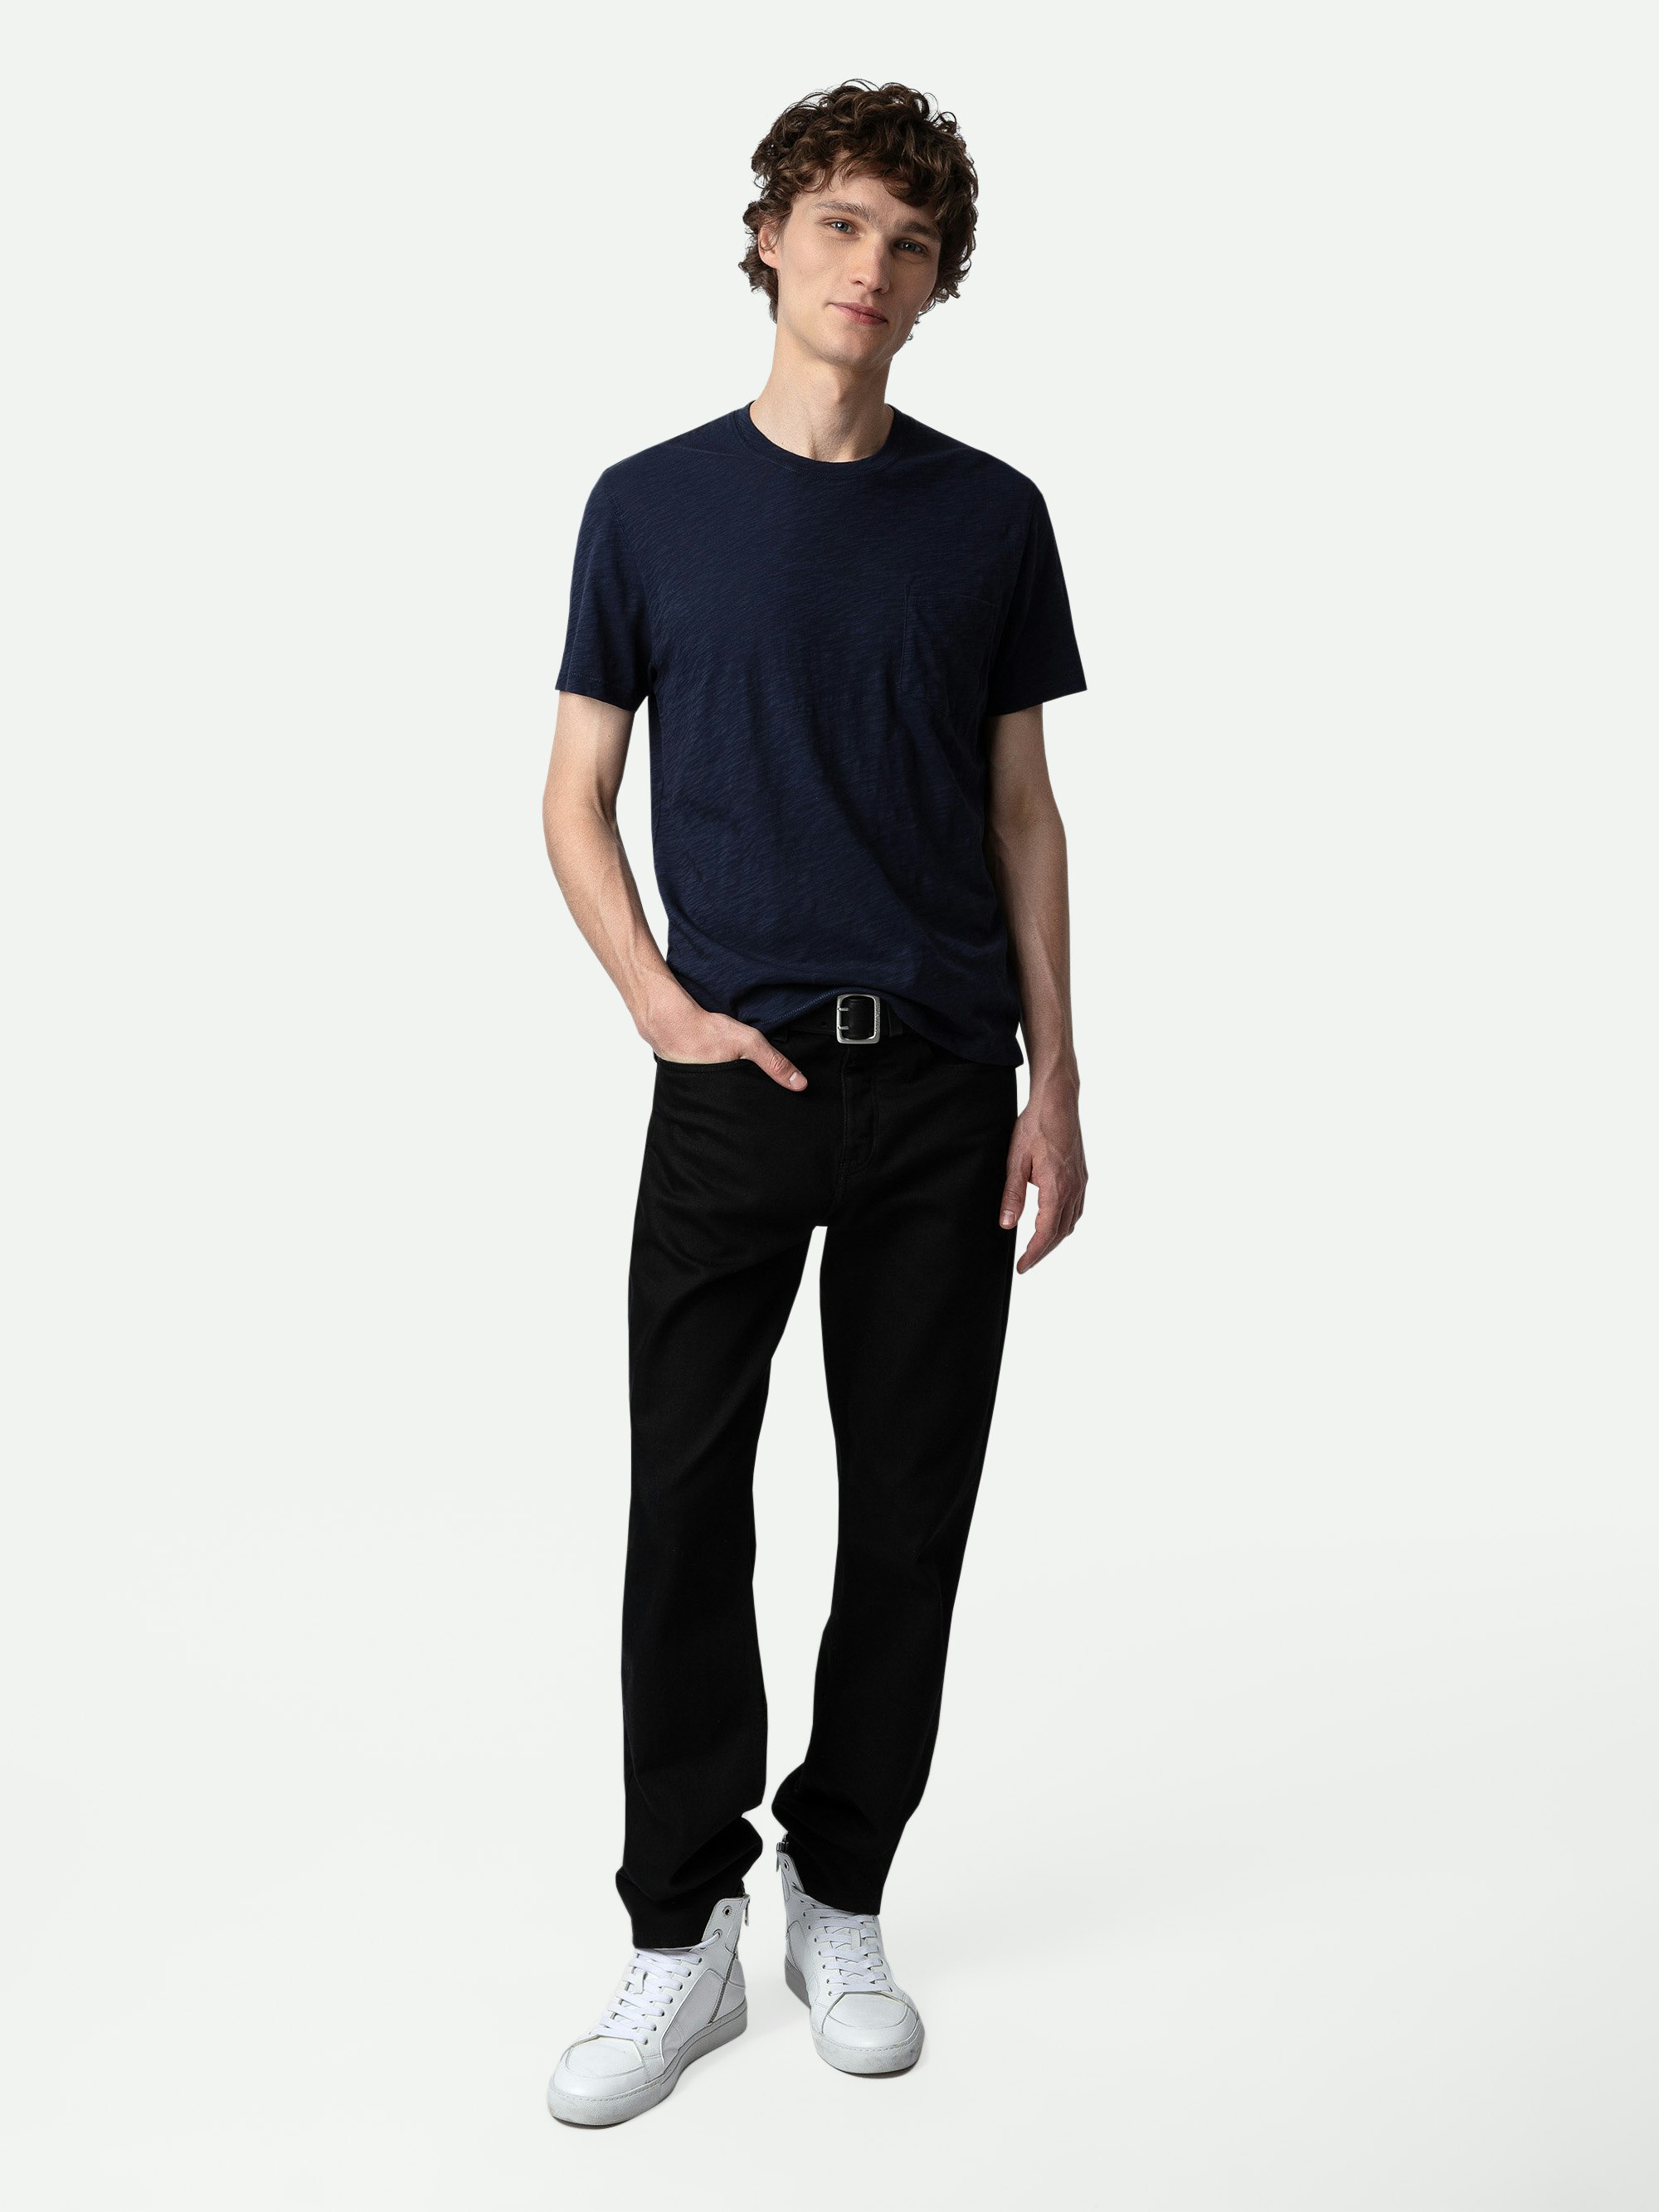 Camiseta Stockholm Flamme - Camiseta azul marino de algodón jaspeado de manga corta, con bolsillo y diseño Skull Block en la espalda.